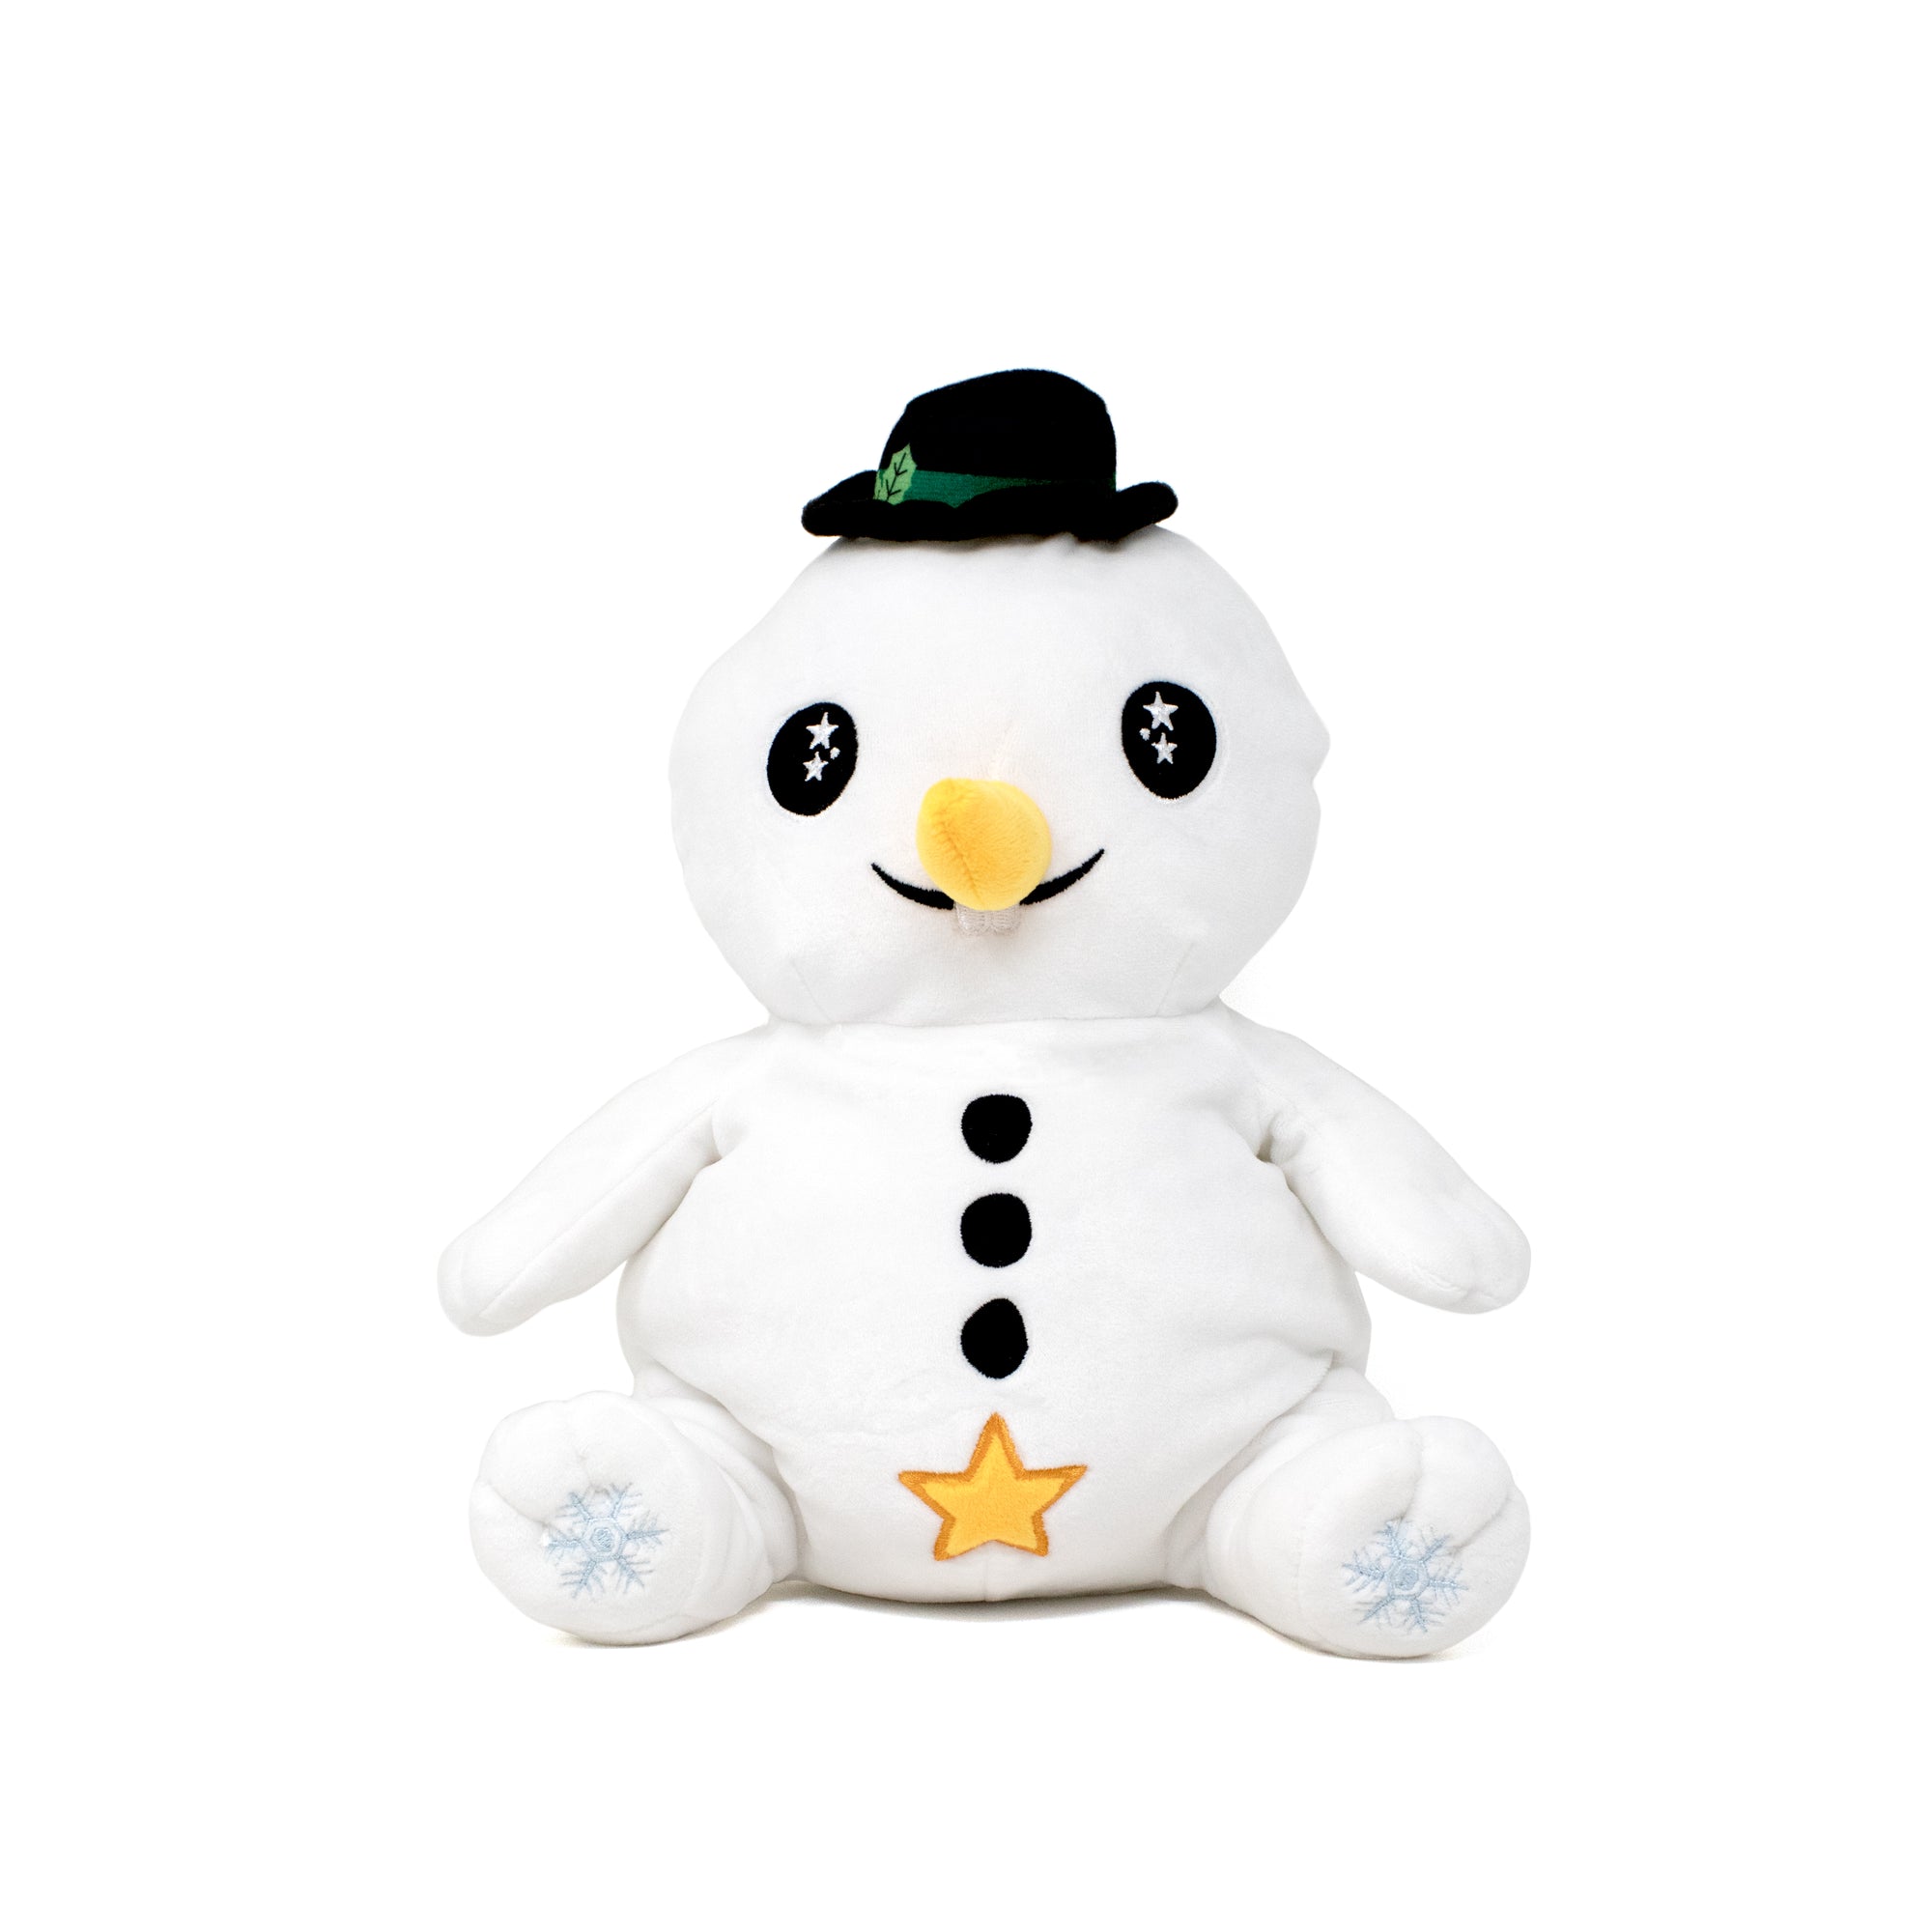 Jack the Snowman Plushie Starlight Buddy